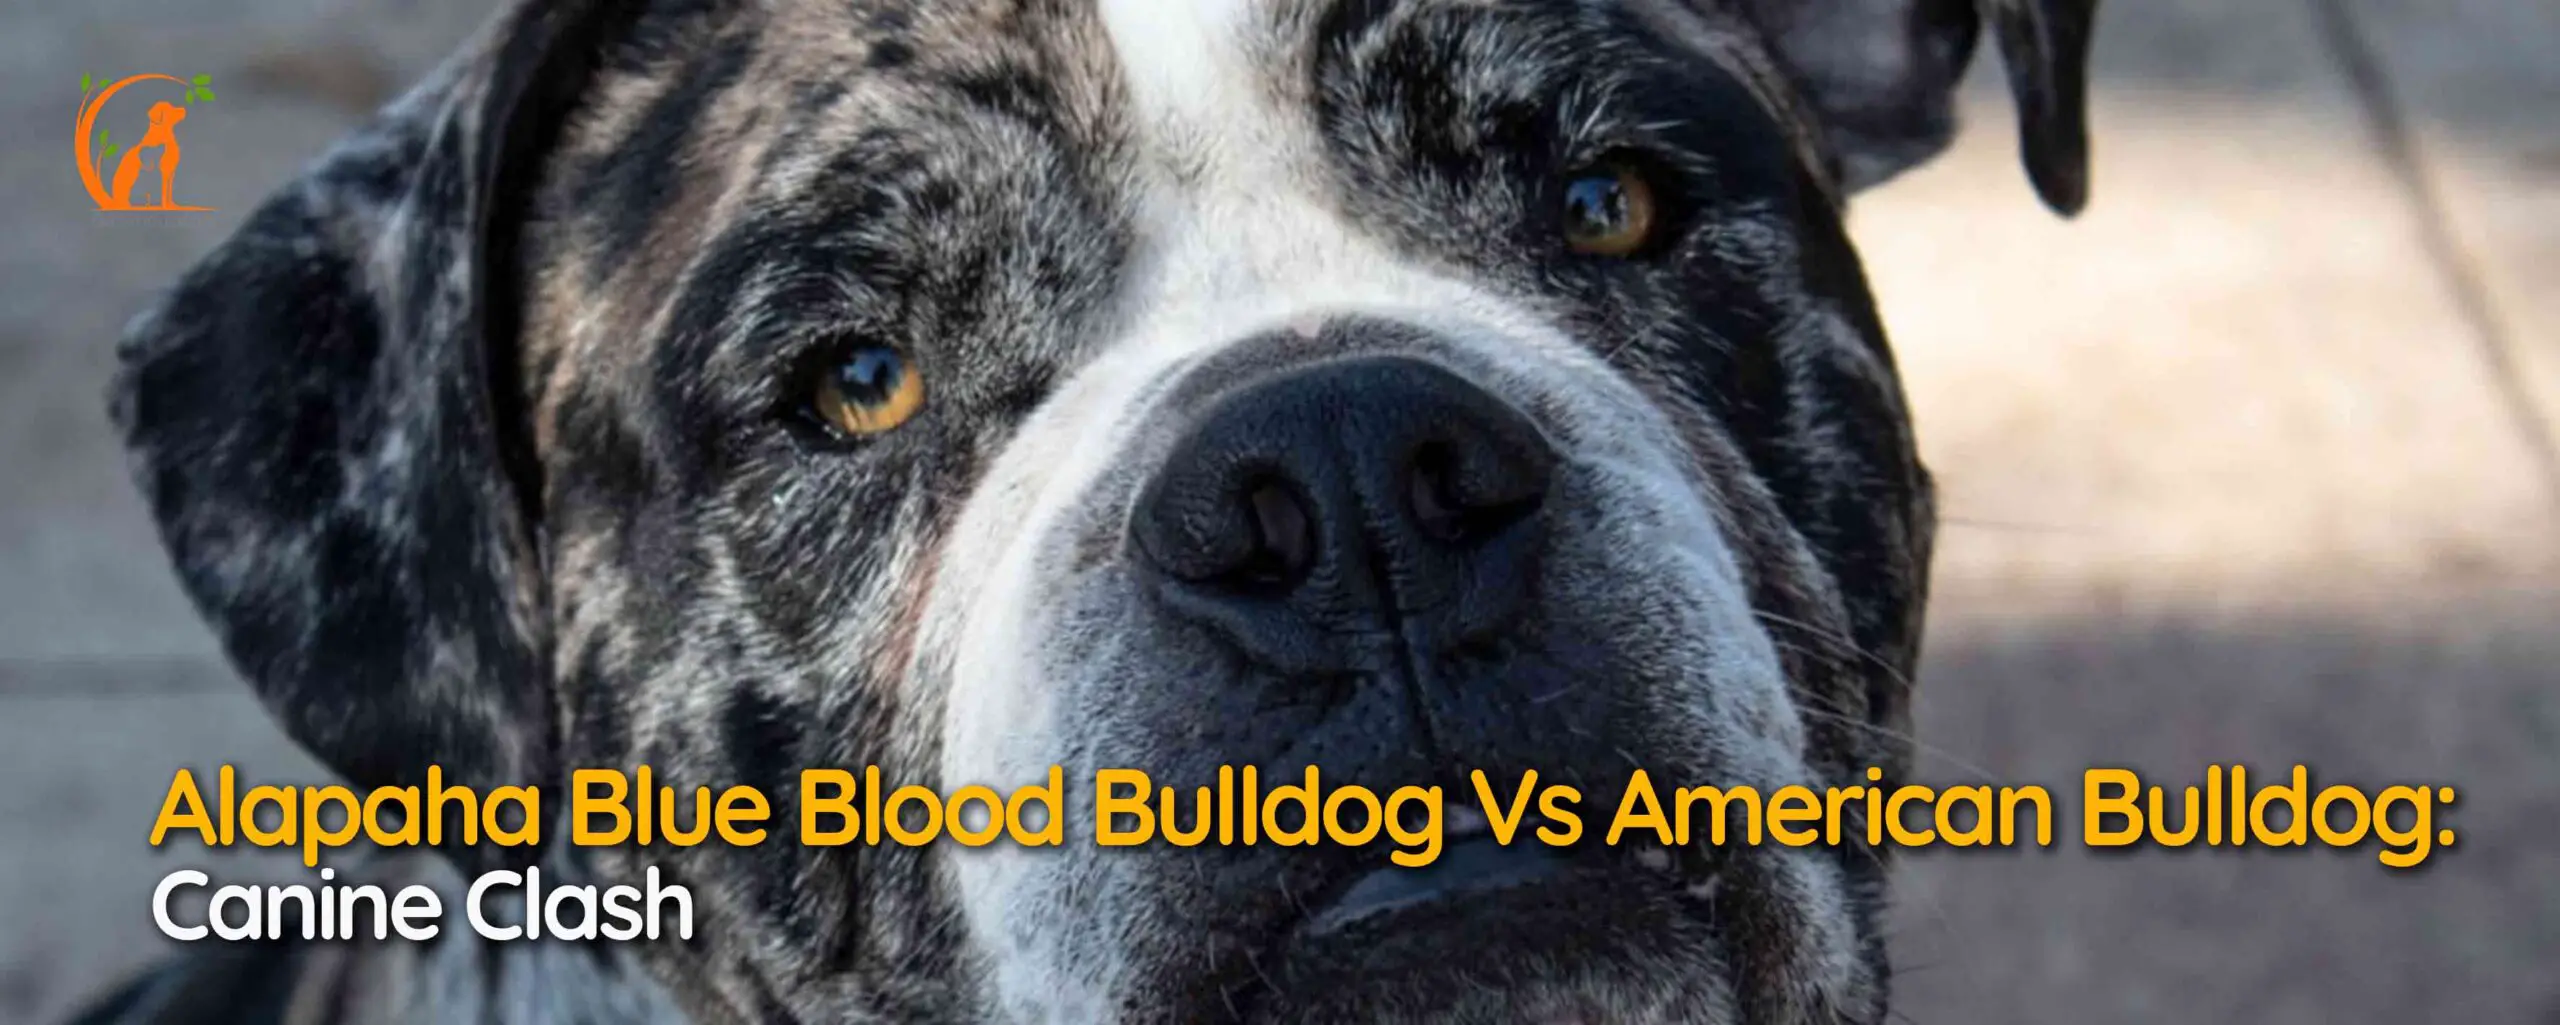 Alapaha Blue Blood Bulldog Vs American Bulldog: Canine Clash